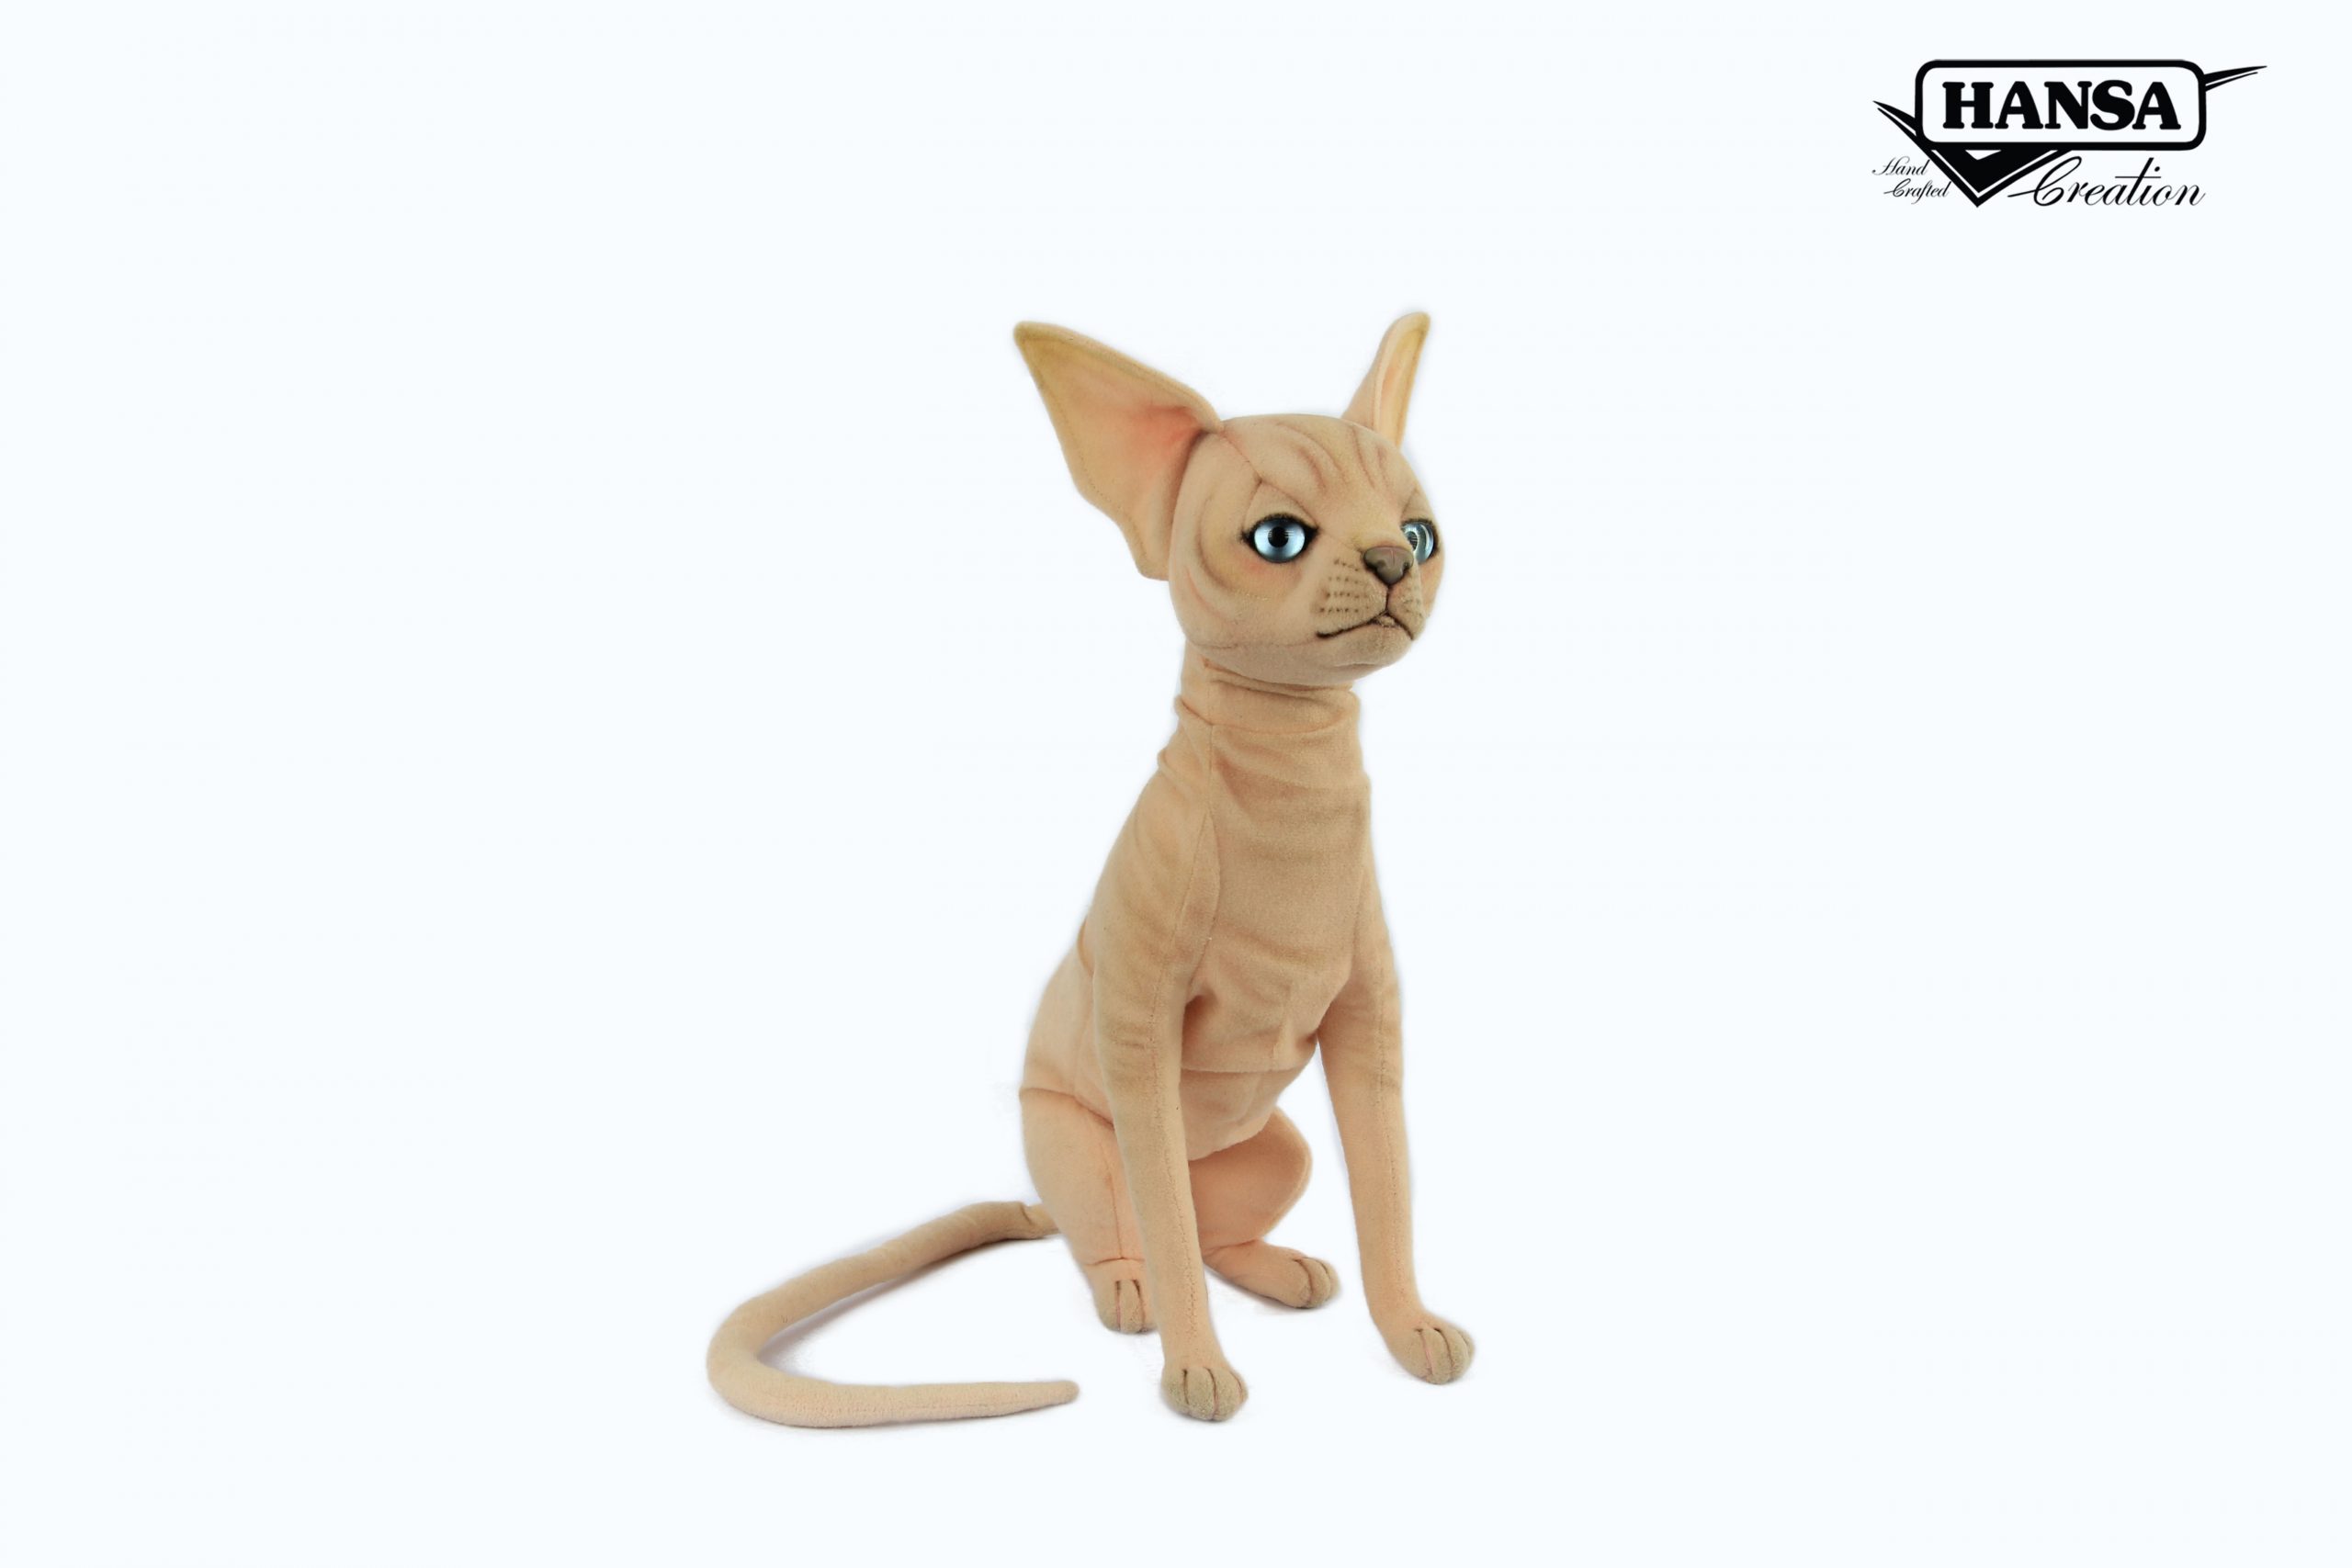 Hansa Sitting Sphynx Cat 8117 Plush Soft Toy Sold by Lincrafts Established 1993 